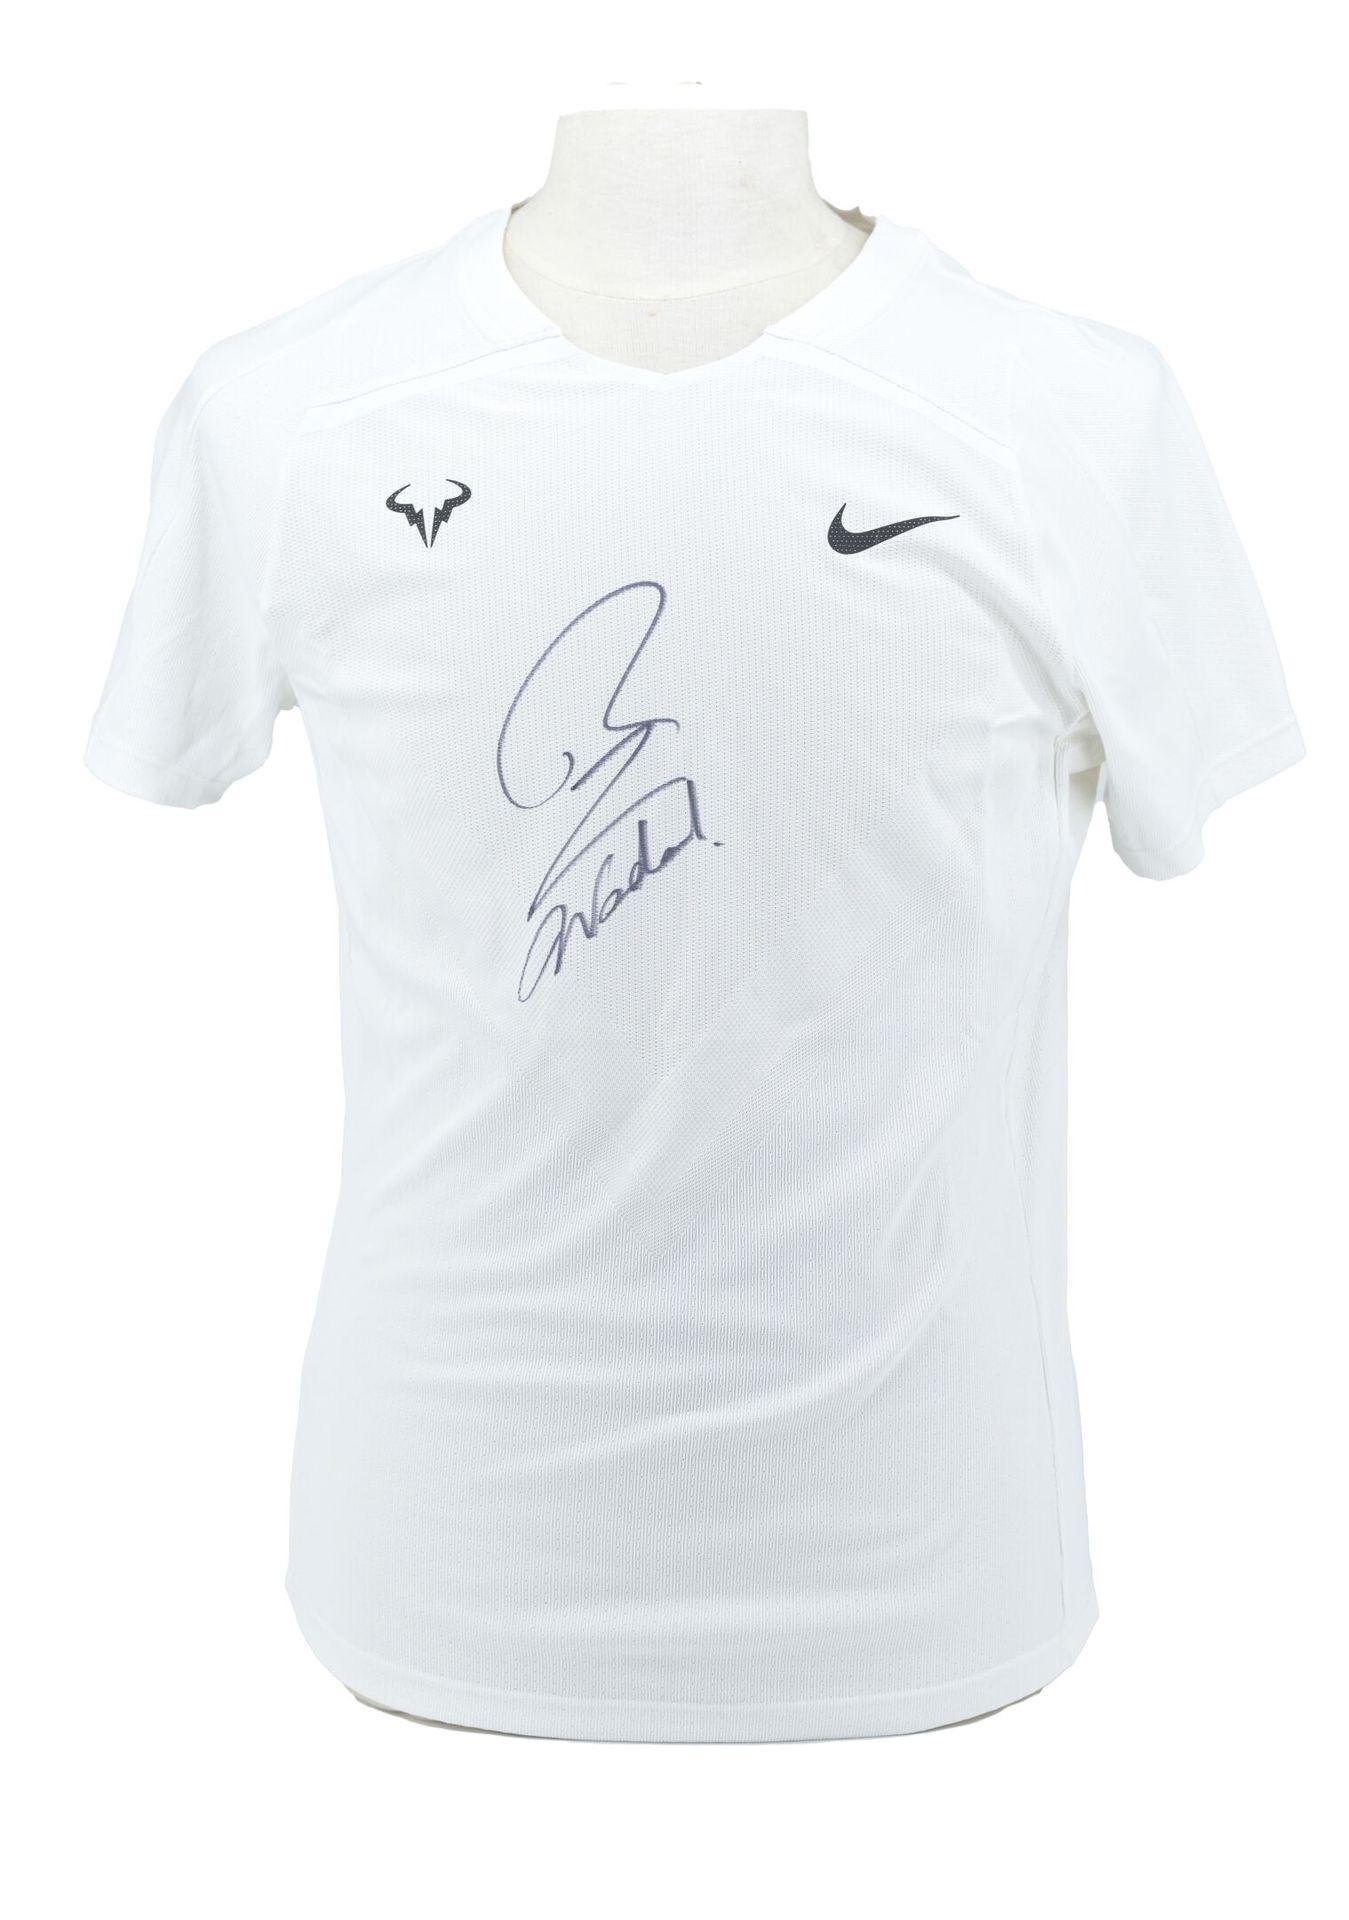 Null Camiseta Nike firmada por Rafael Nadal - 2023

Nota : 
- Camiseta ofrecida &hellip;